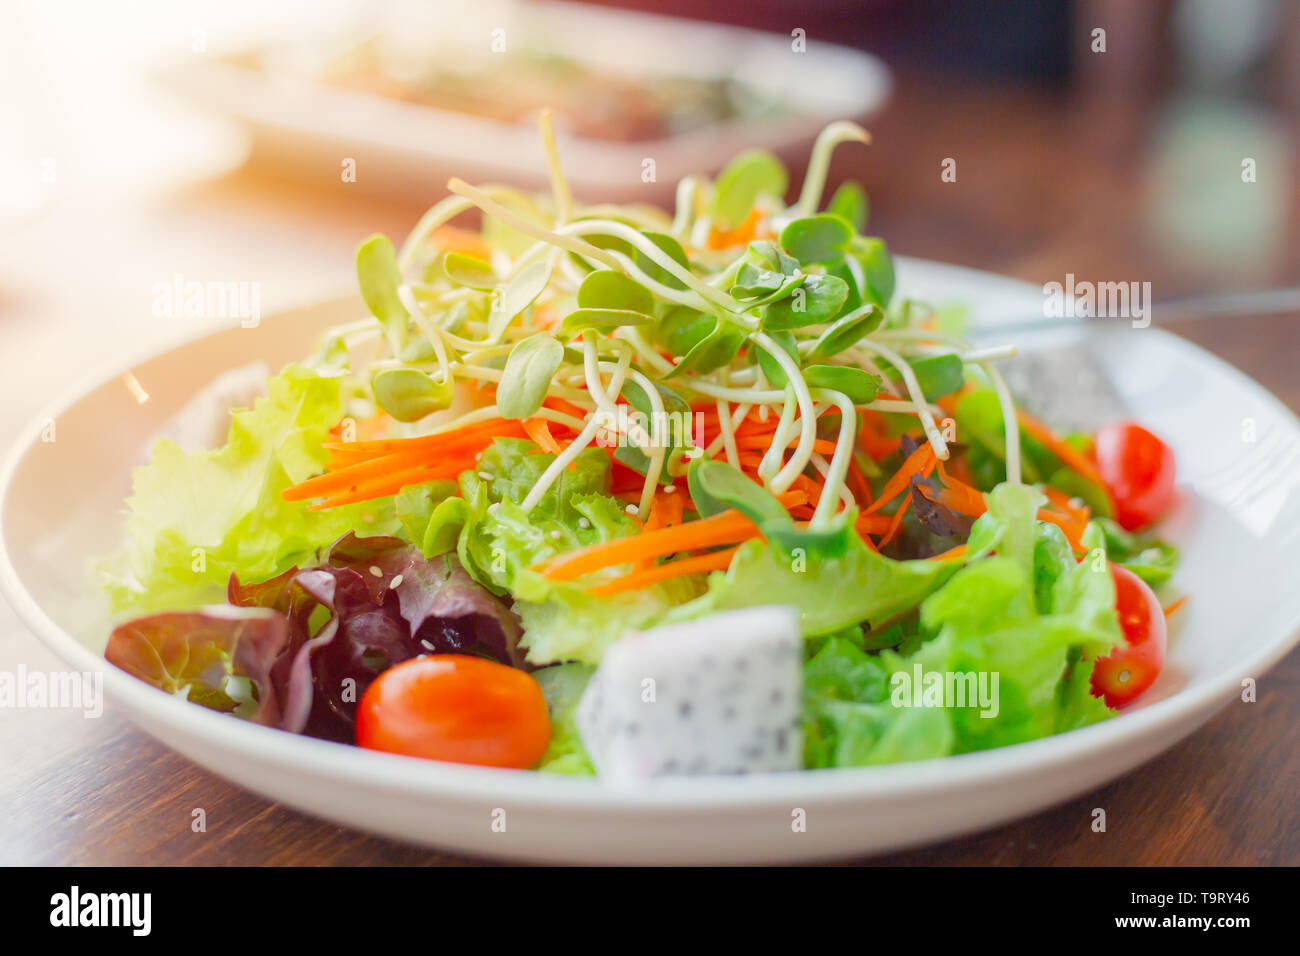 vegan meal vegetable fruit mix salad clean healthy food vegetarian low fat high fiber food Stock Photo